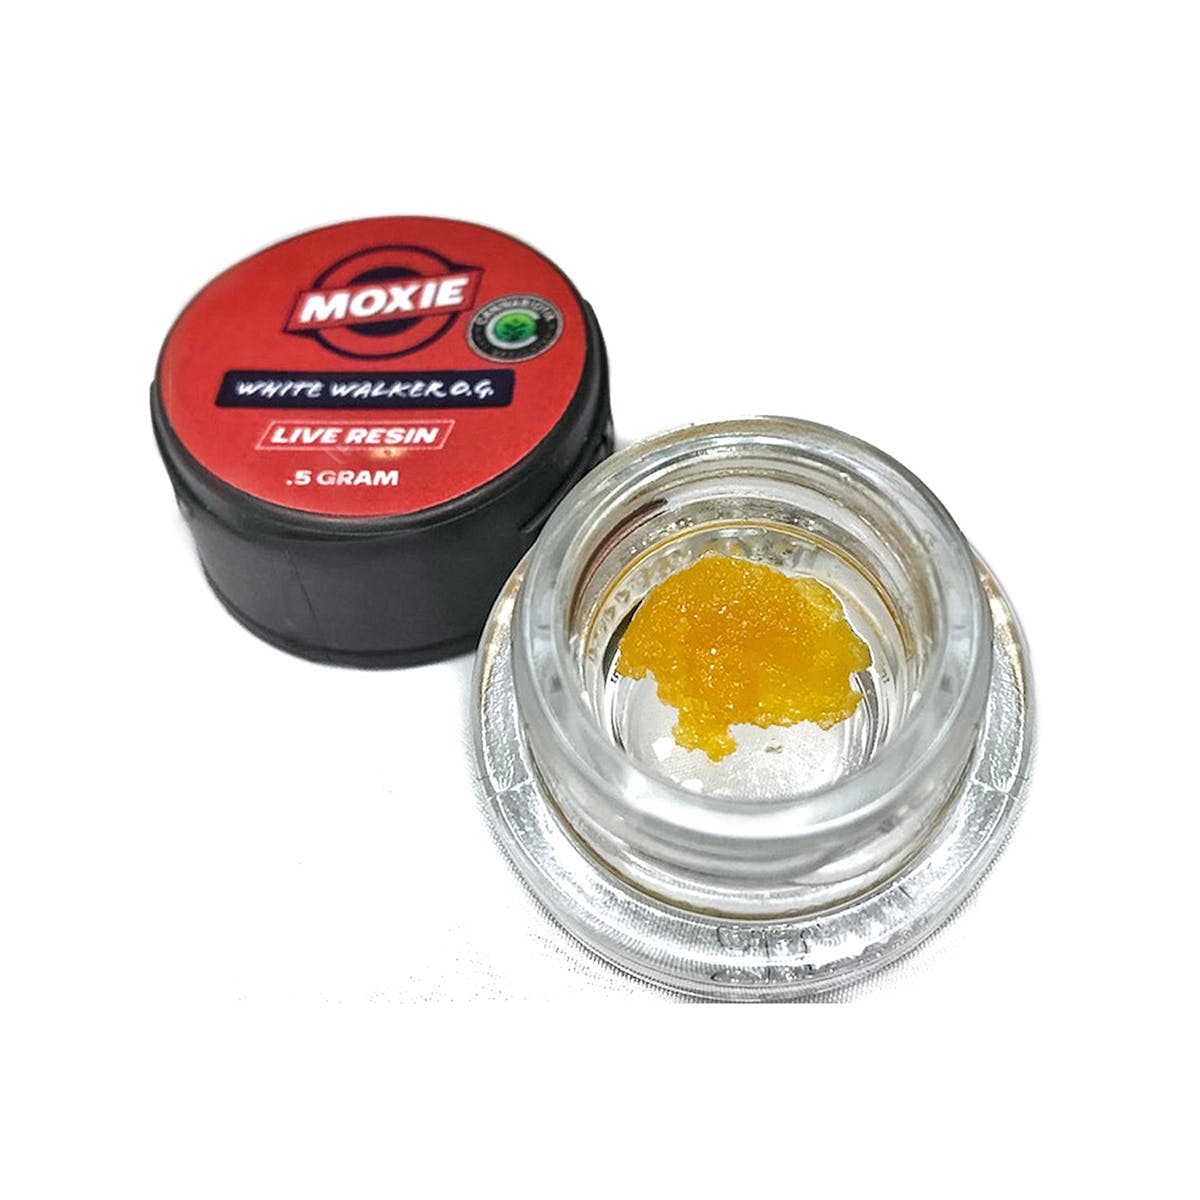 marijuana-dispensaries-7123-sepulveda-blvd-van-nuys-white-walker-og-live-resin-sauce